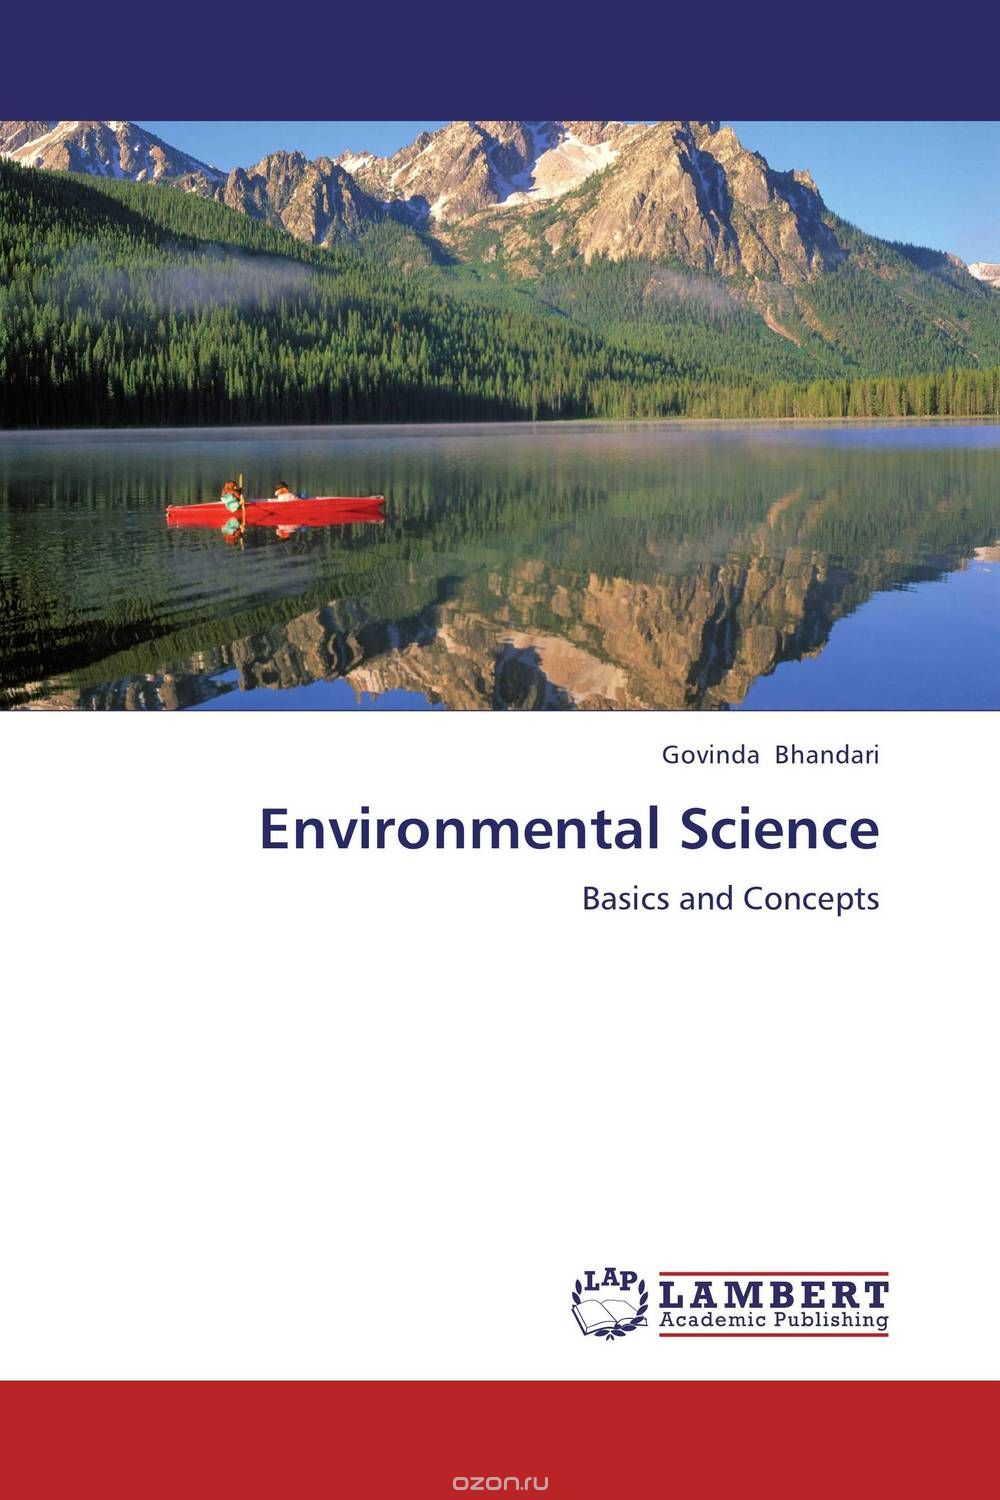 Скачать книгу "Environmental Science"